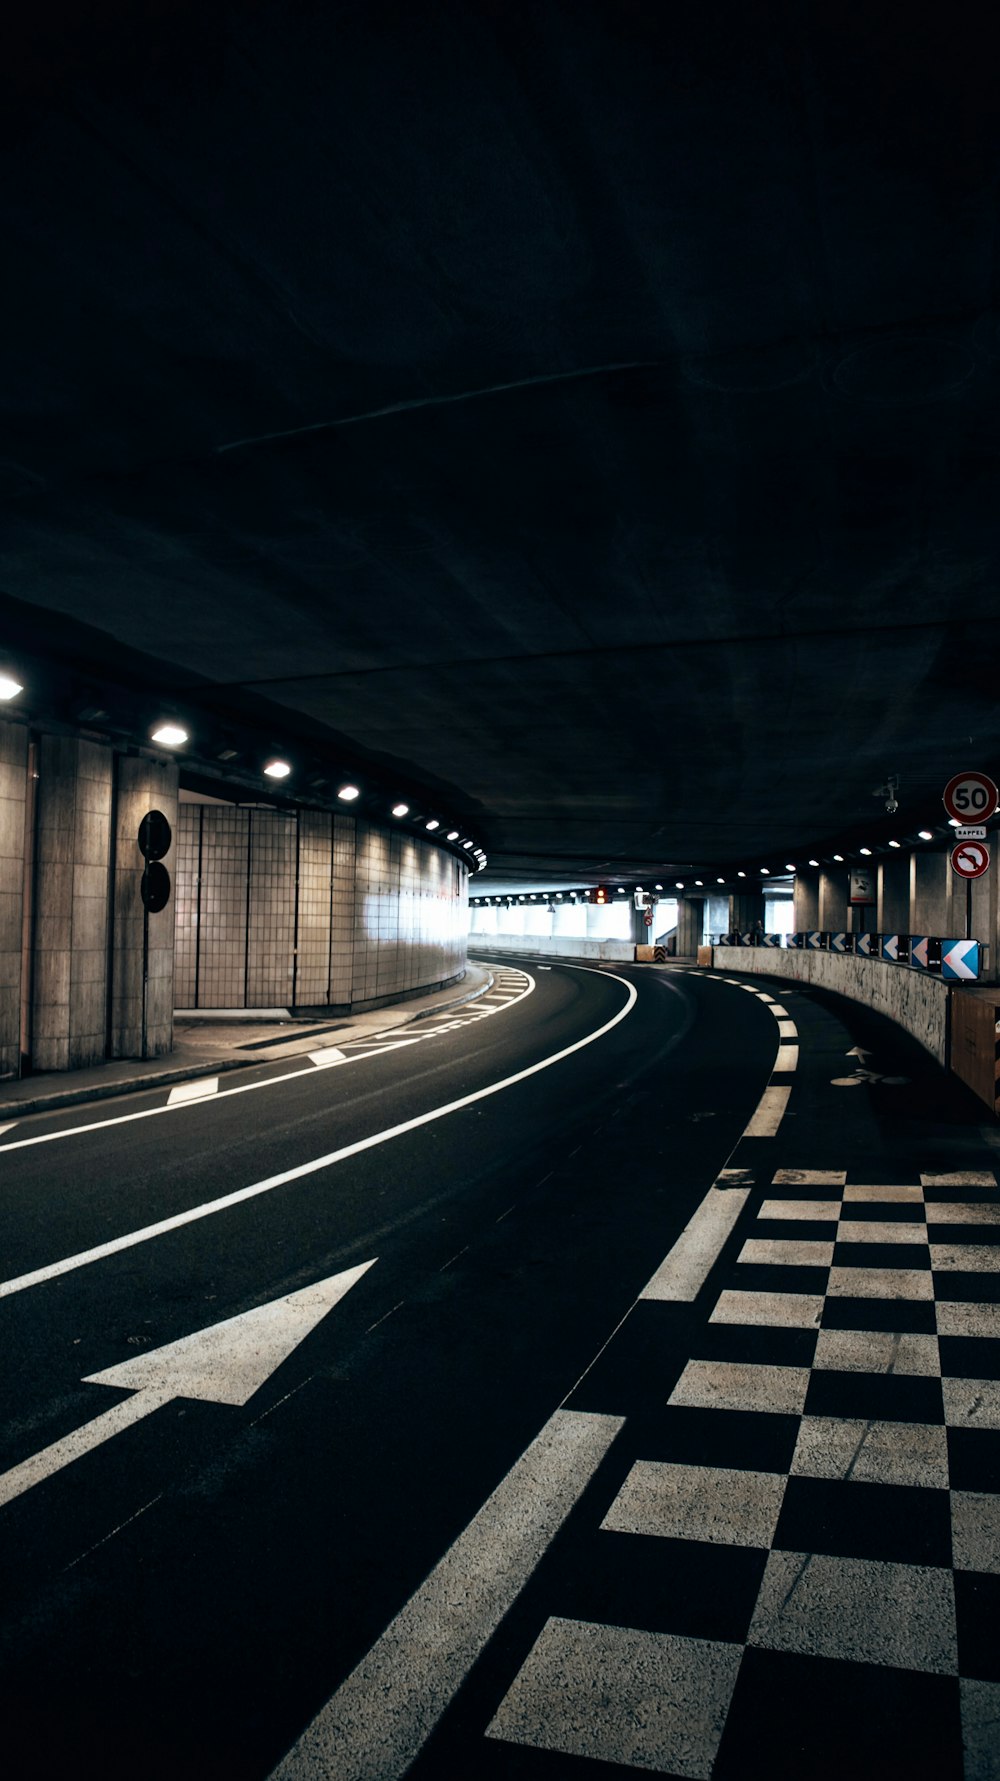 Un tunnel buio con pavimento a scacchi e luci